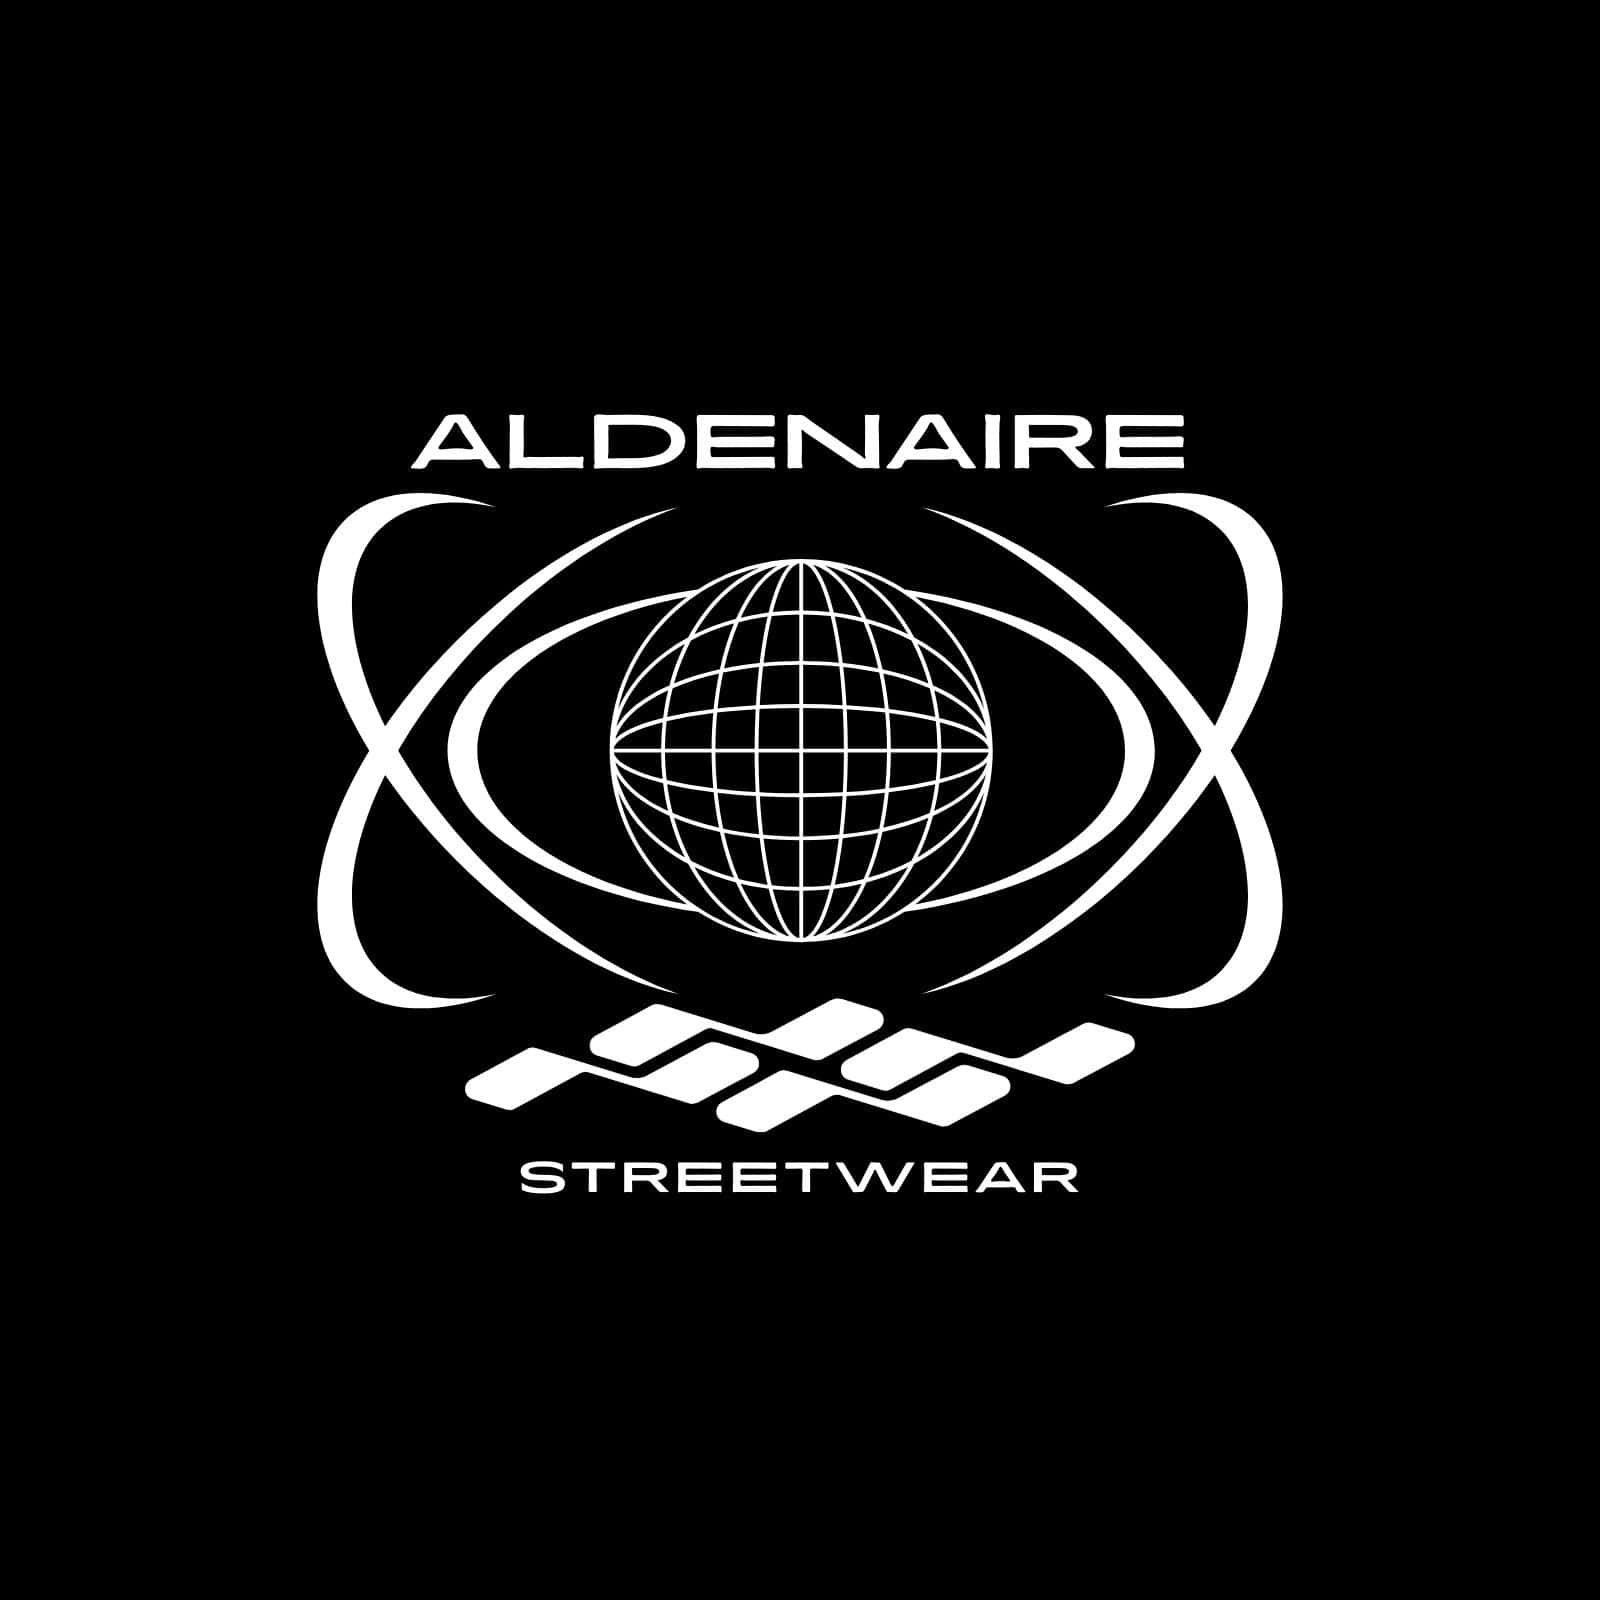 Aldenaire Streetwear Logo Blackand White Wallpaper